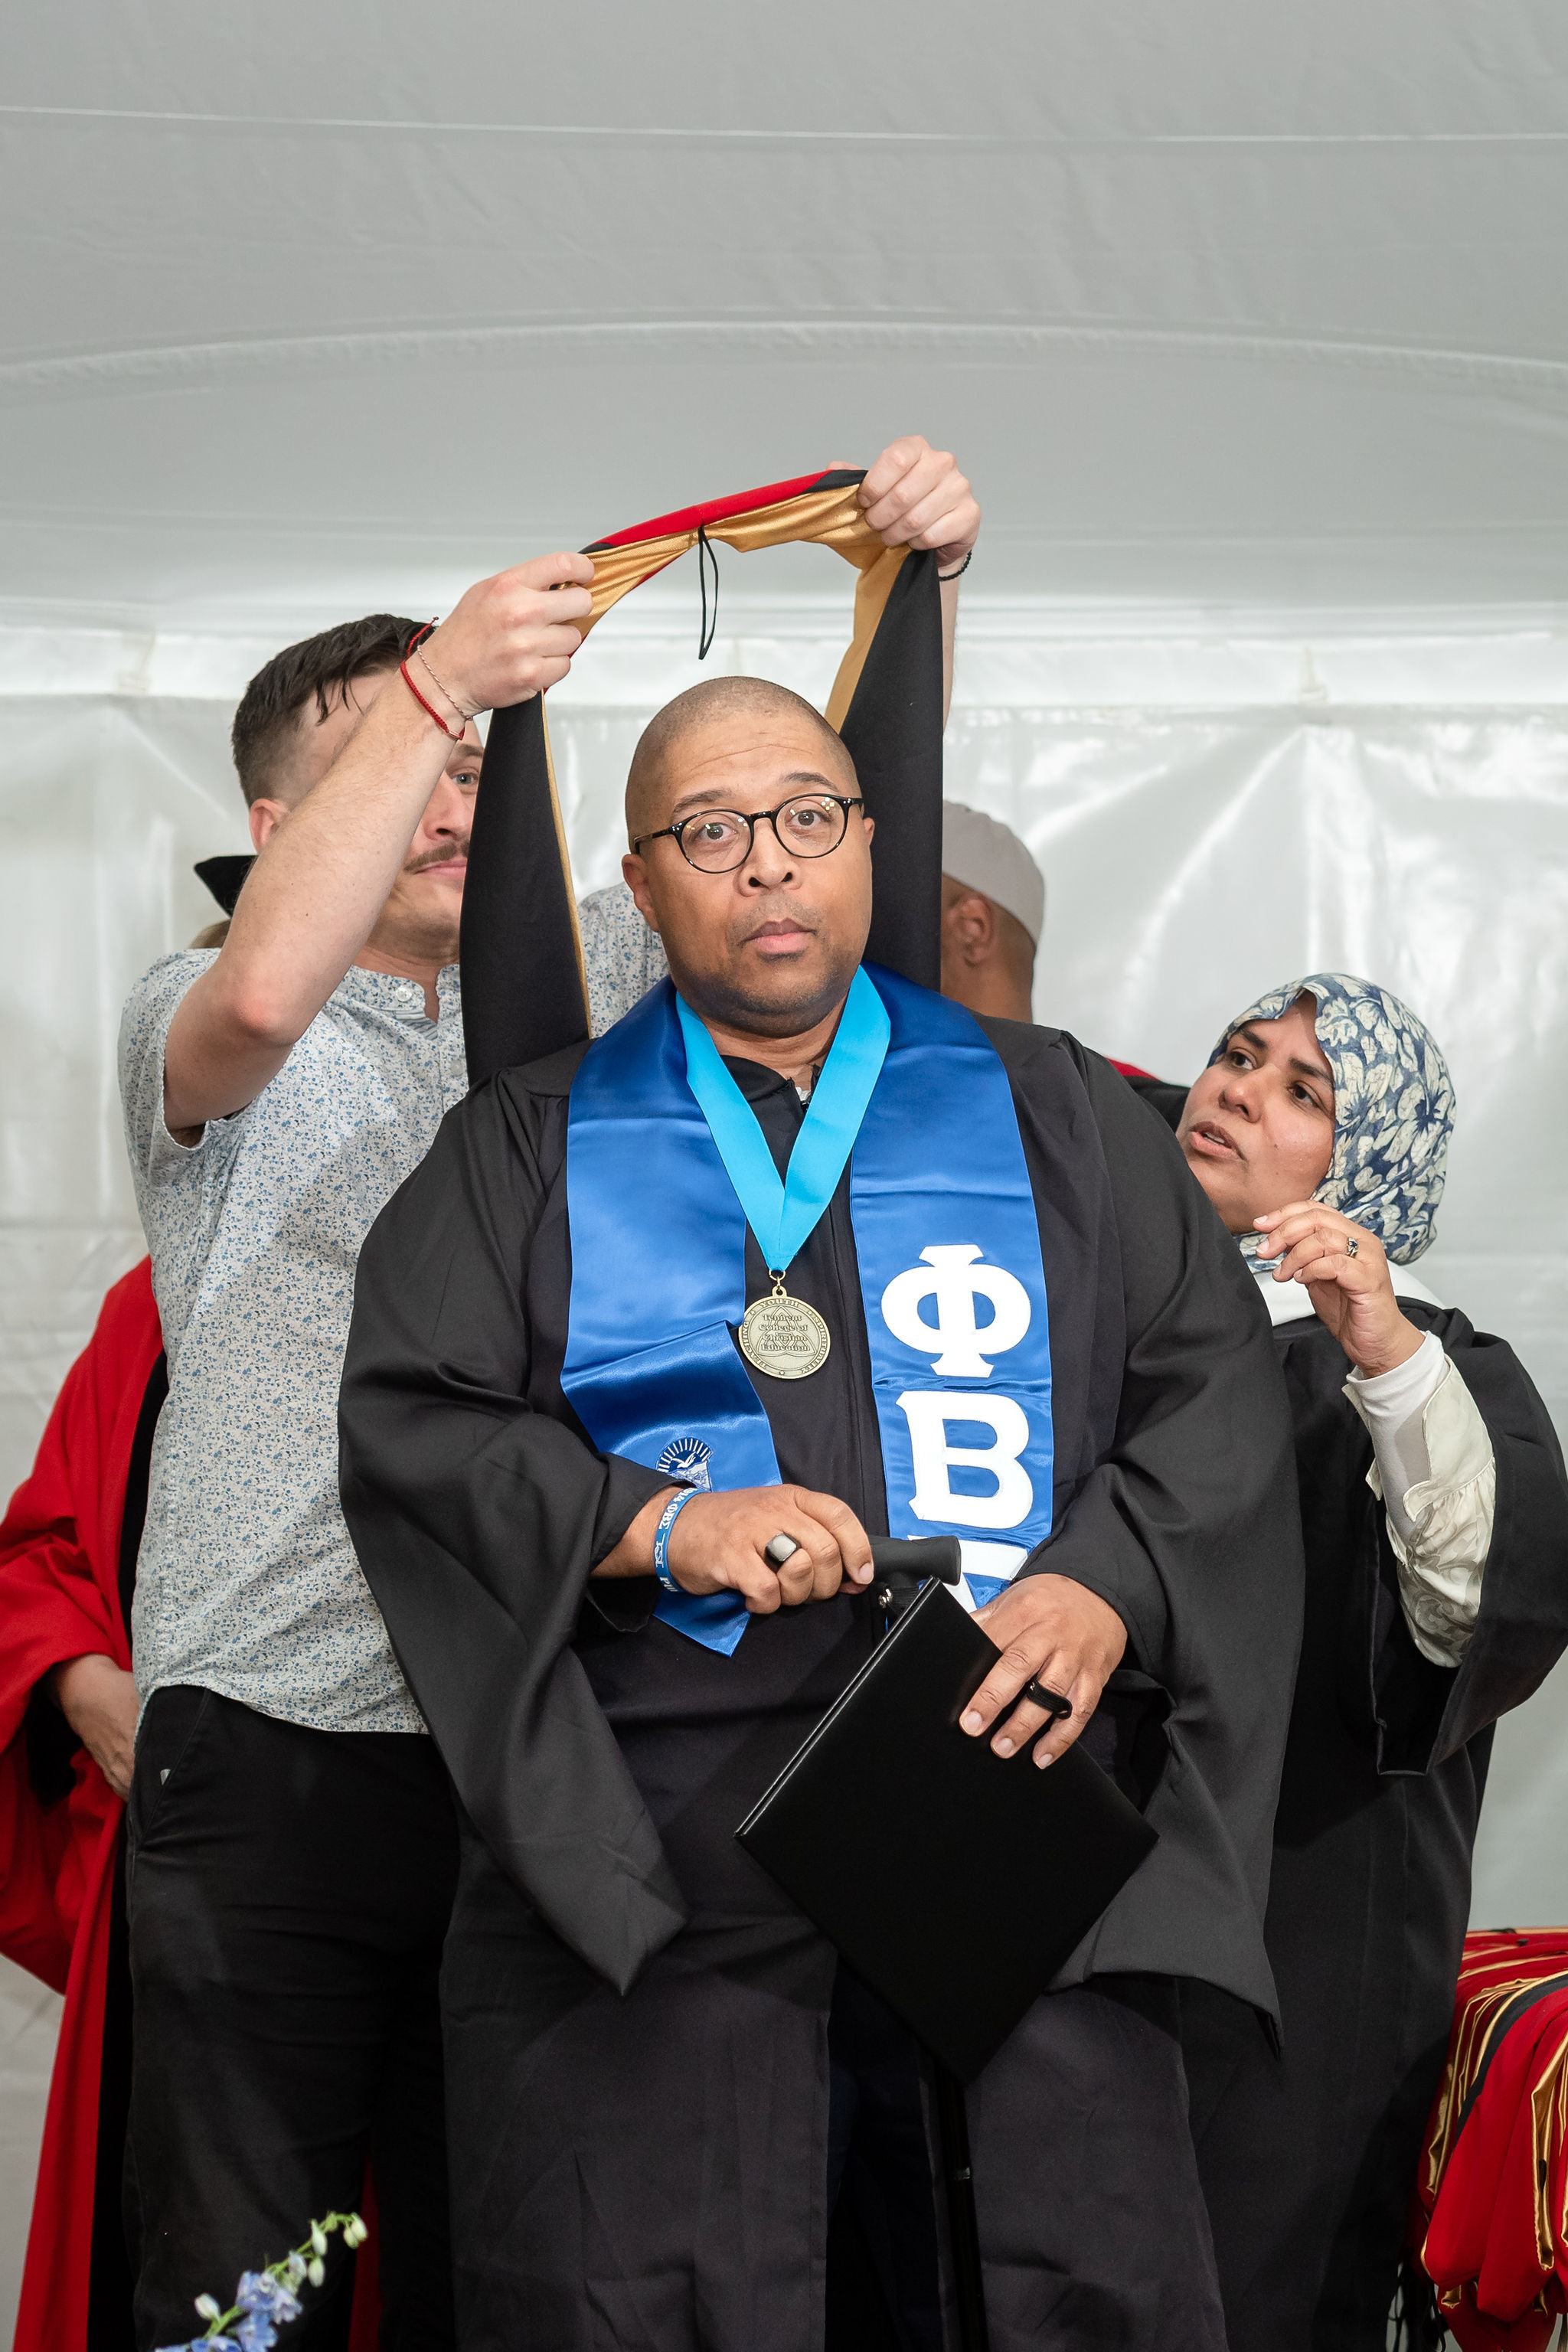 Man receiving graduation hood